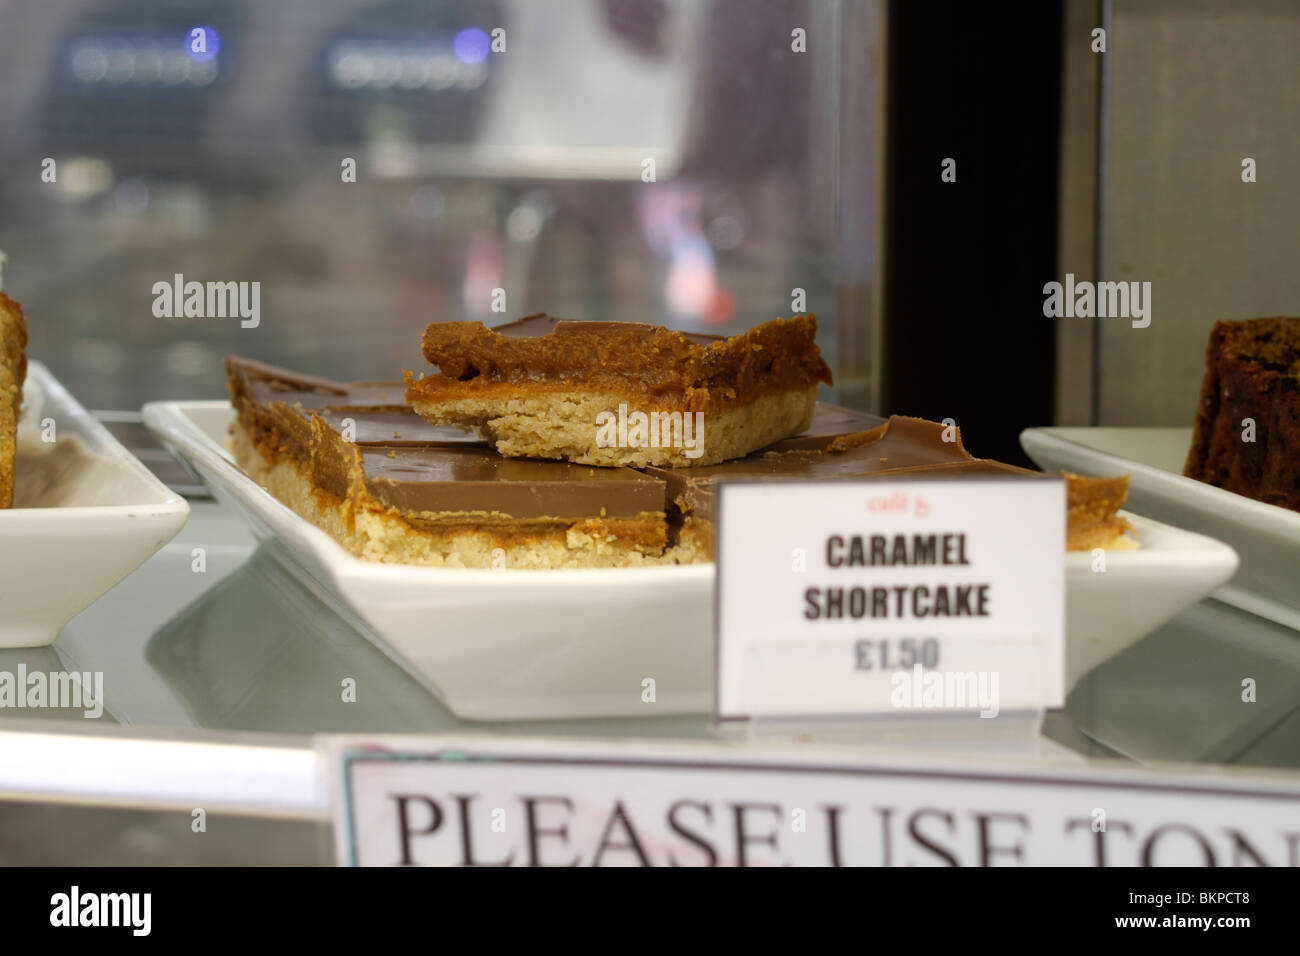 Caramel shortcake Stock Photo